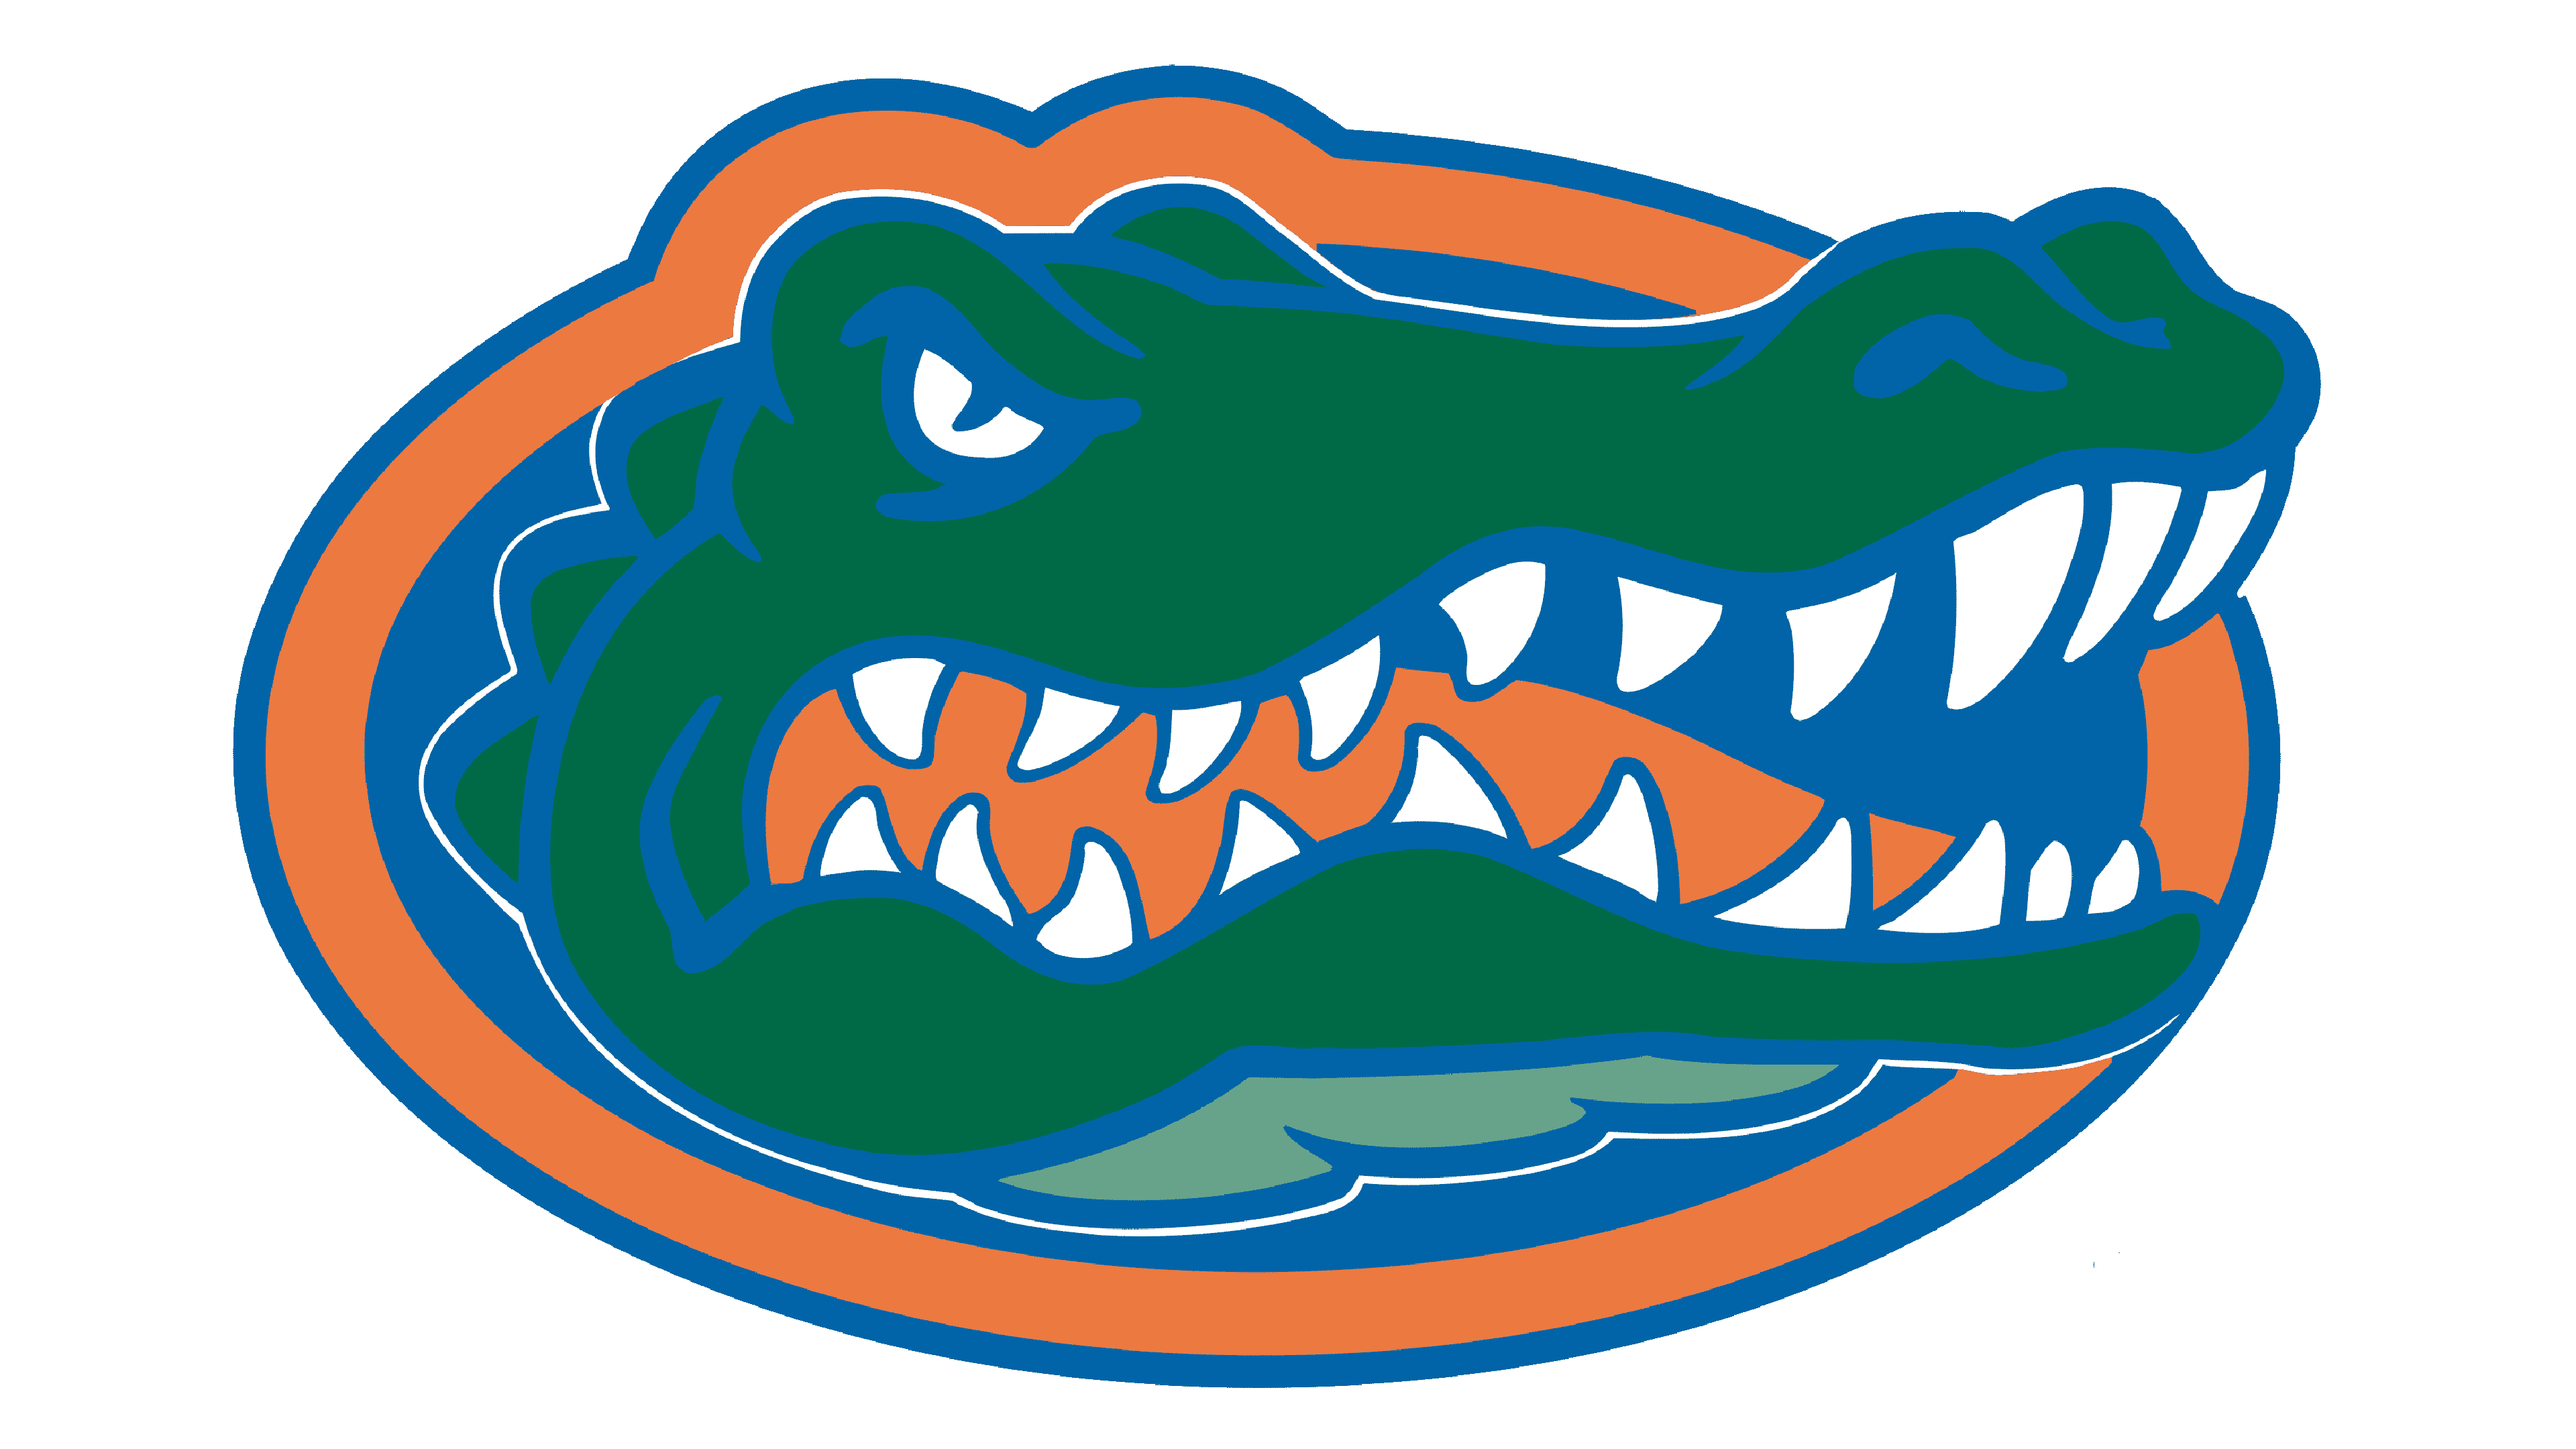 Florida Gators Logo and symbol, meaning, history, sign.